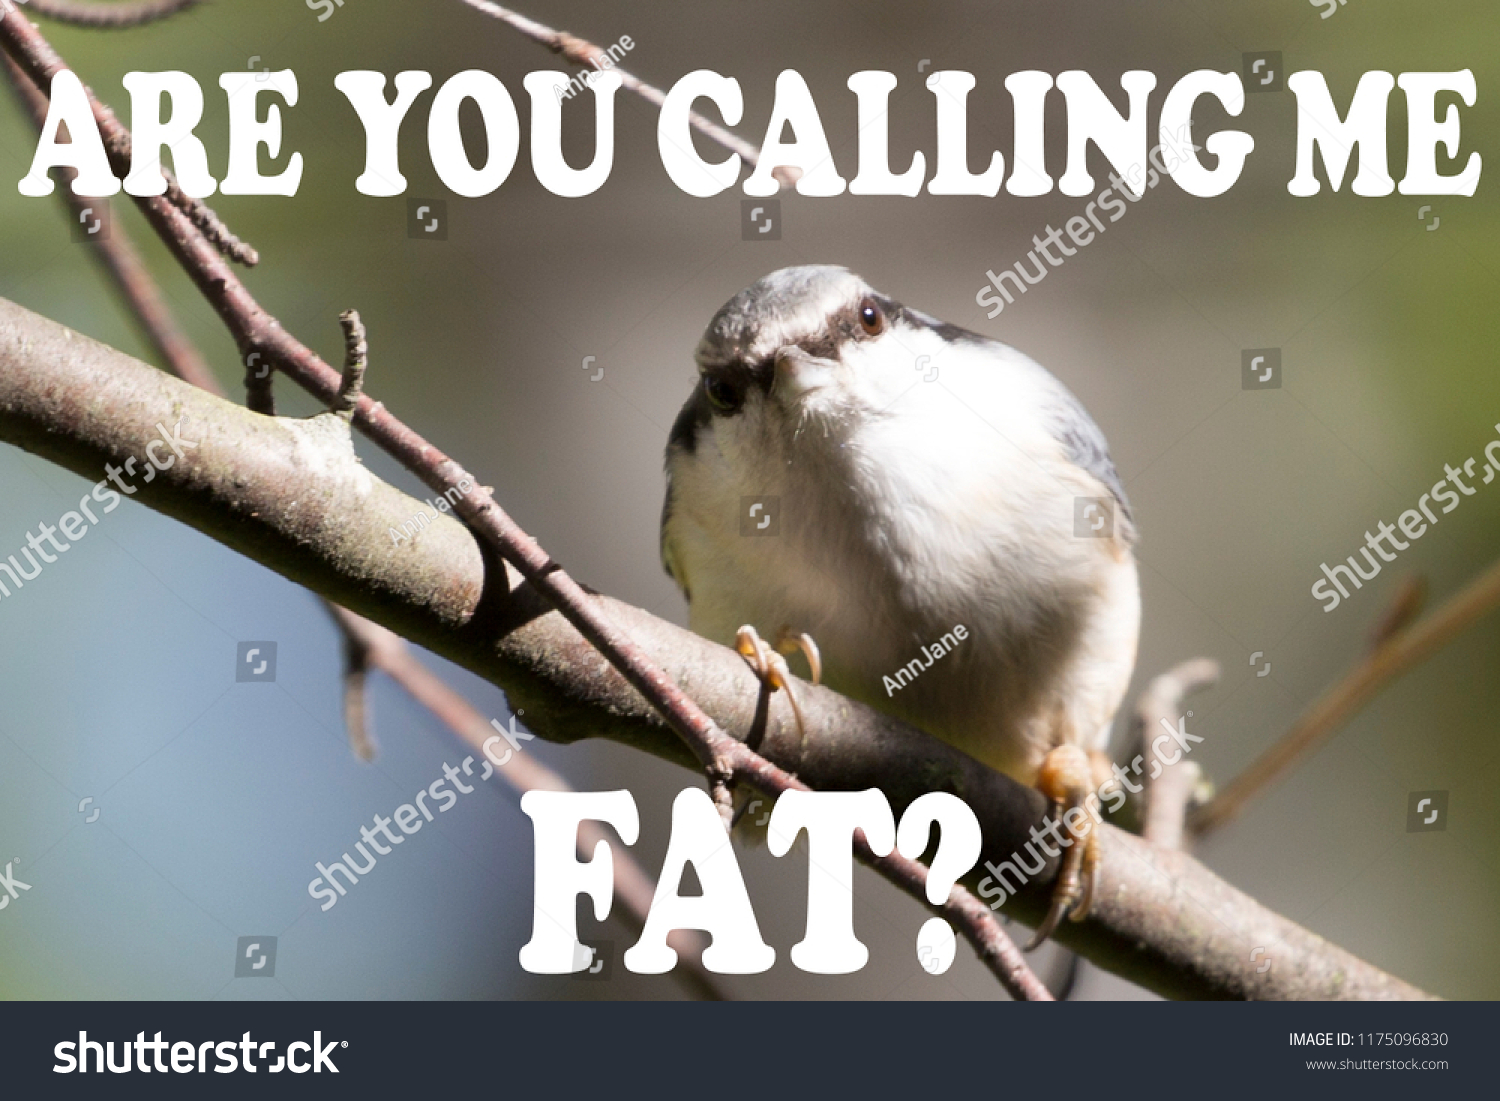 Bird Memes You Calling Me Fat Stok Fotoğrafı 1175096830 Shutterstock.